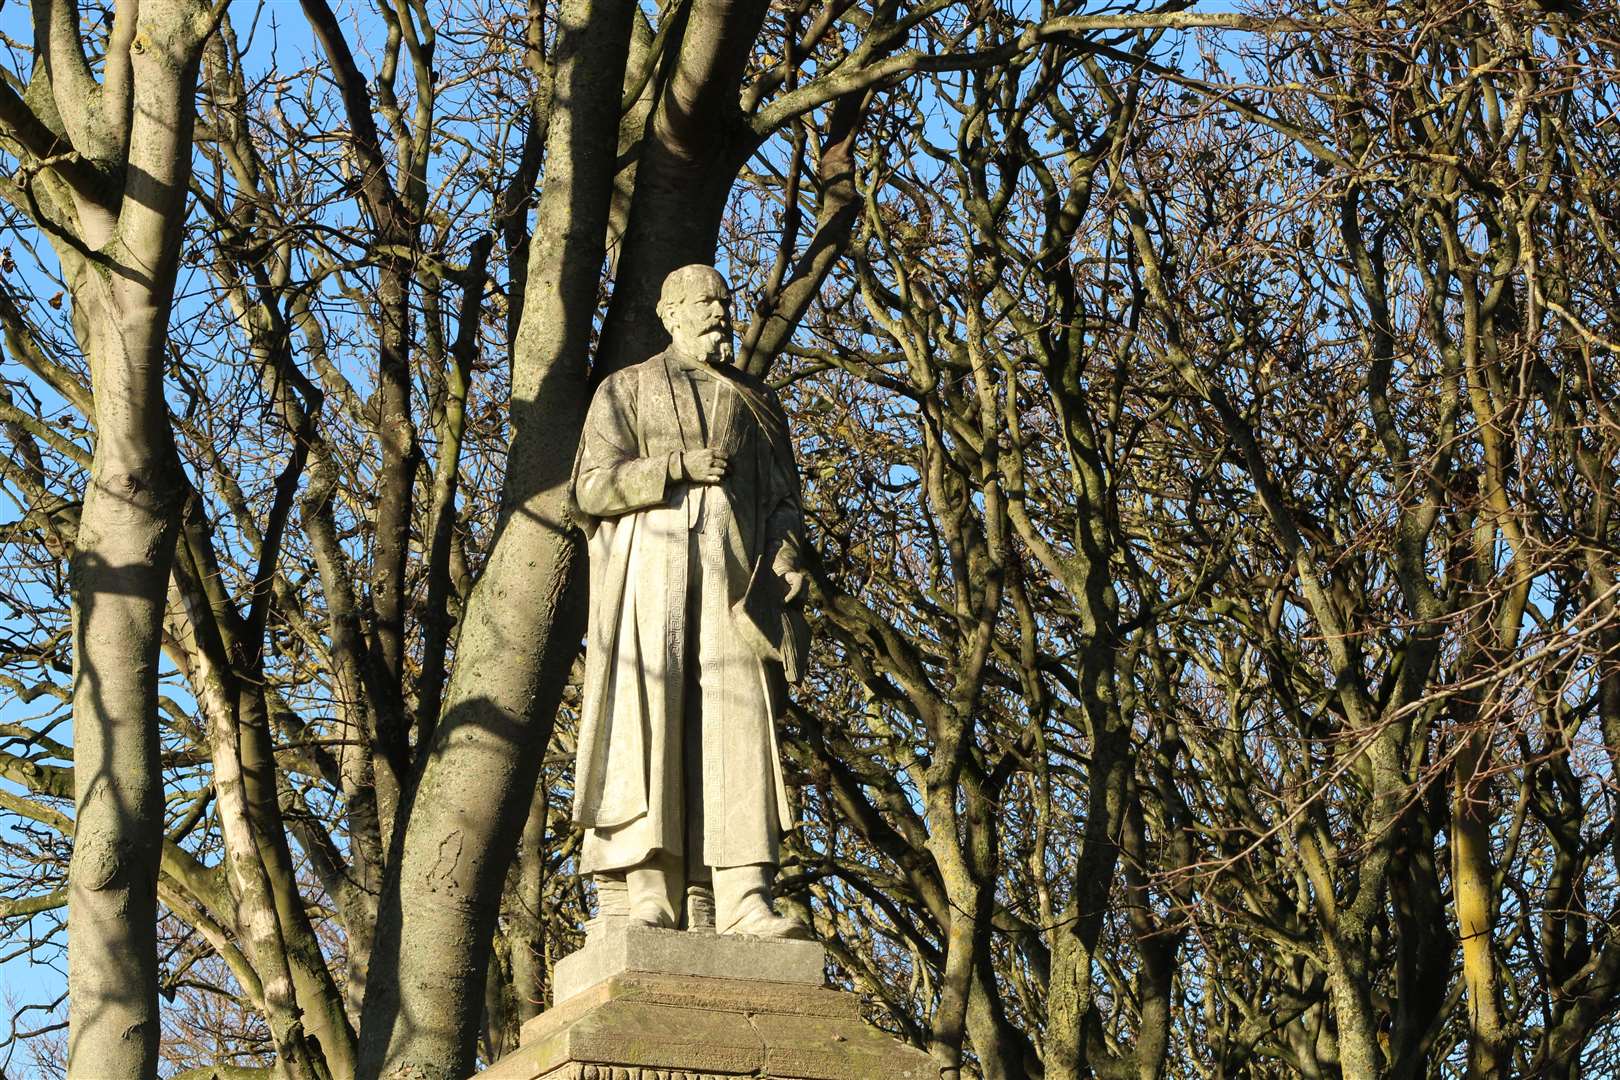 The statue of Dr John Alexander above Wick's riverside.